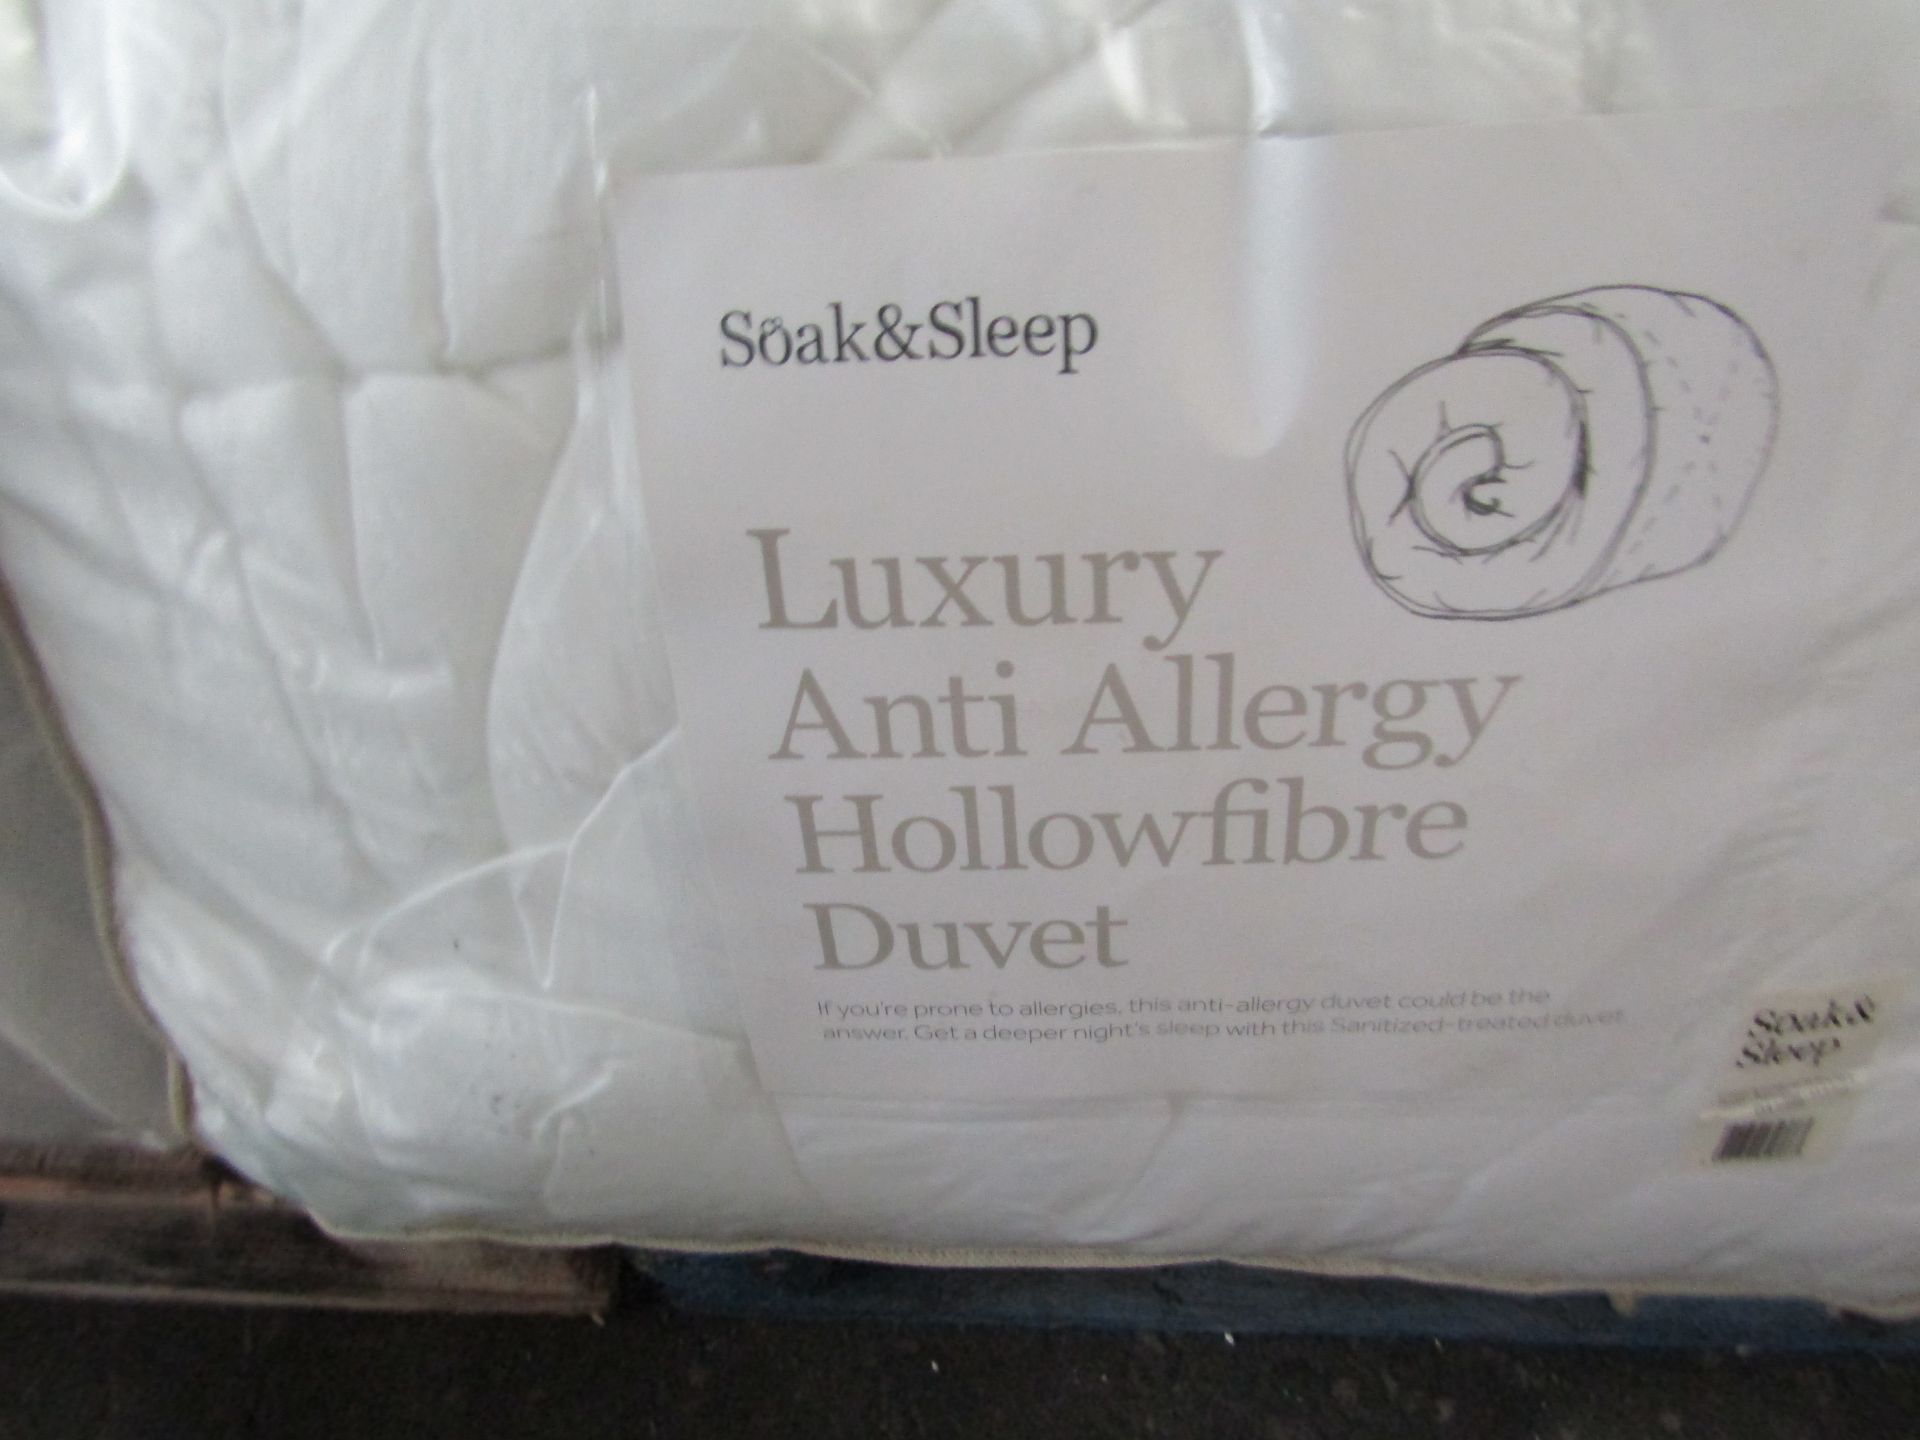 Soak & Sleep Anti Allergen Hollowfibre Duvet Superking 13.5 Tog RRP 60